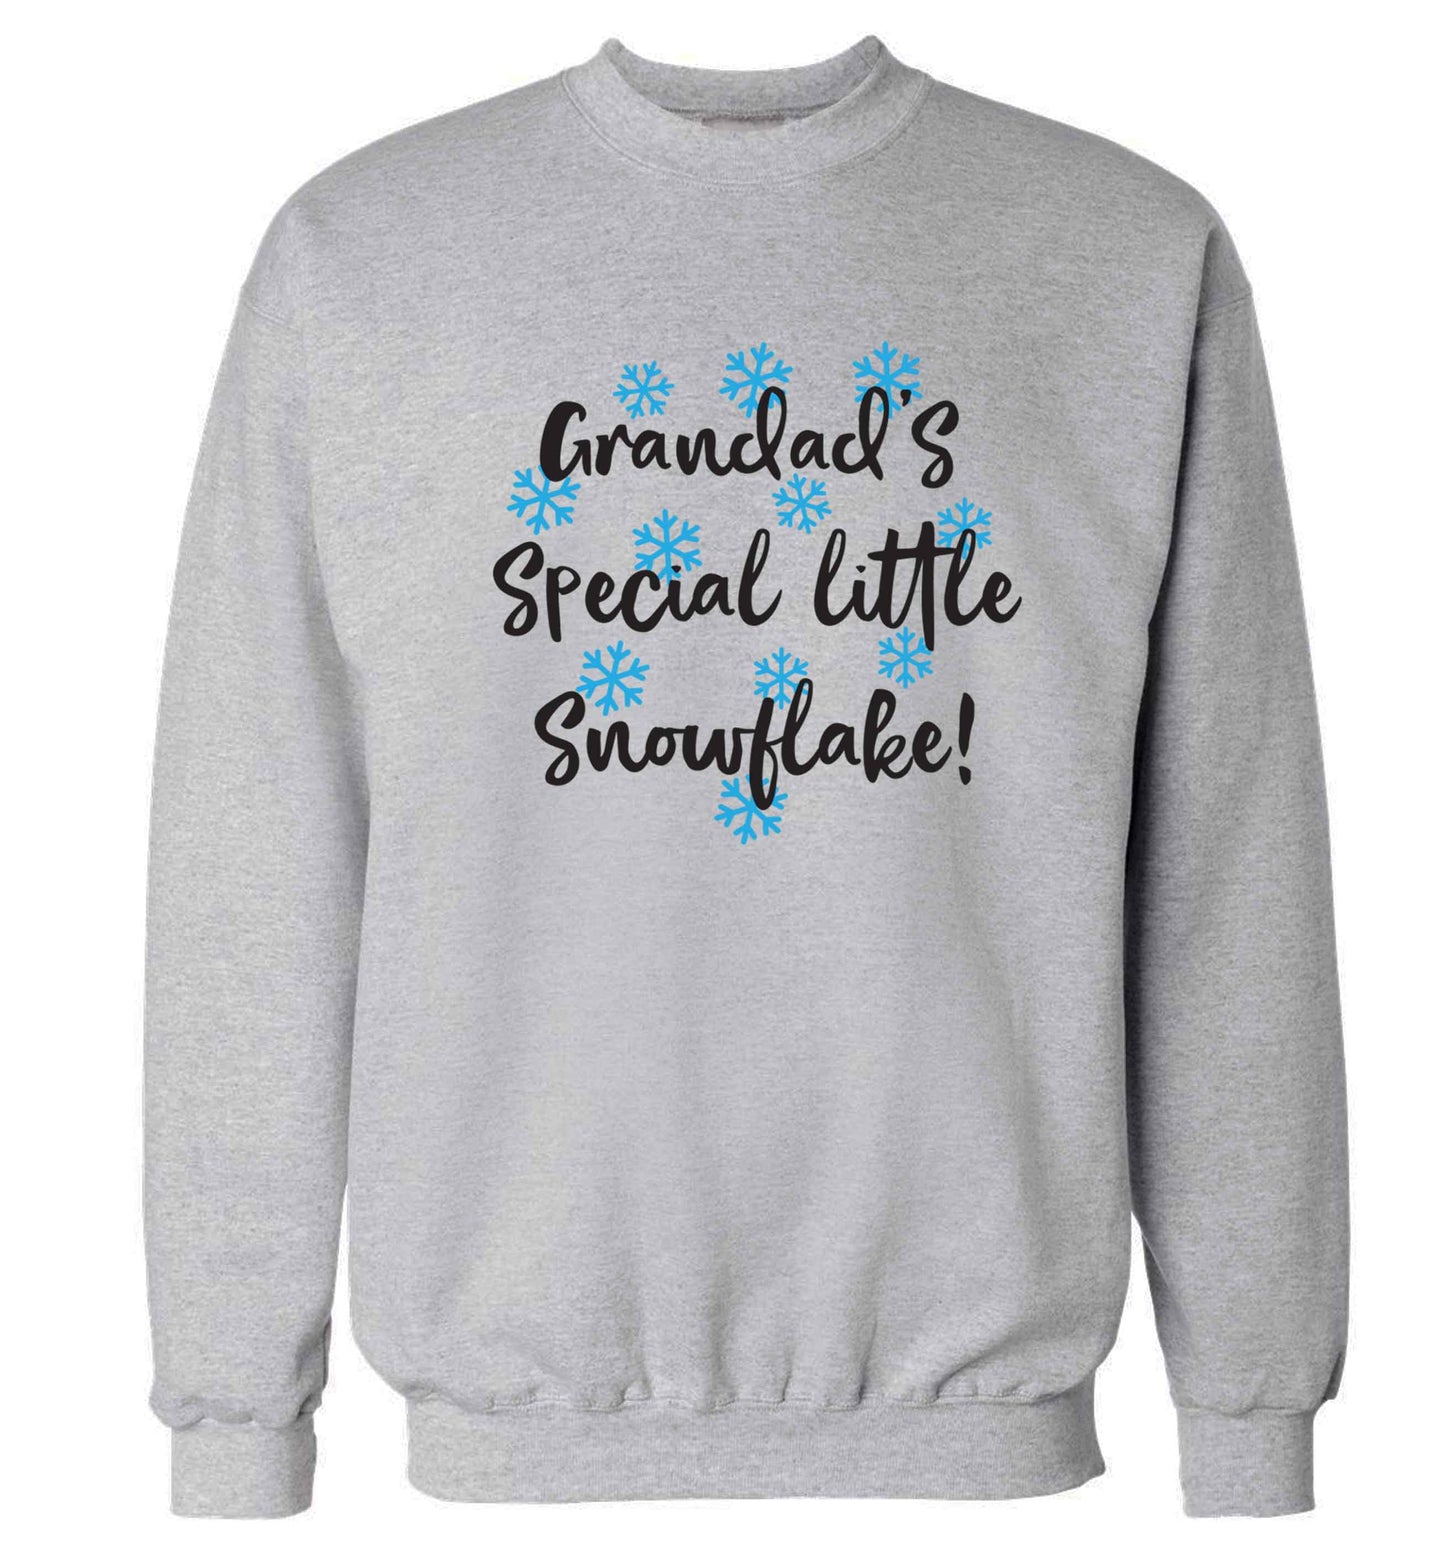 Grandad's special little snowflake Adult's unisex grey Sweater 2XL